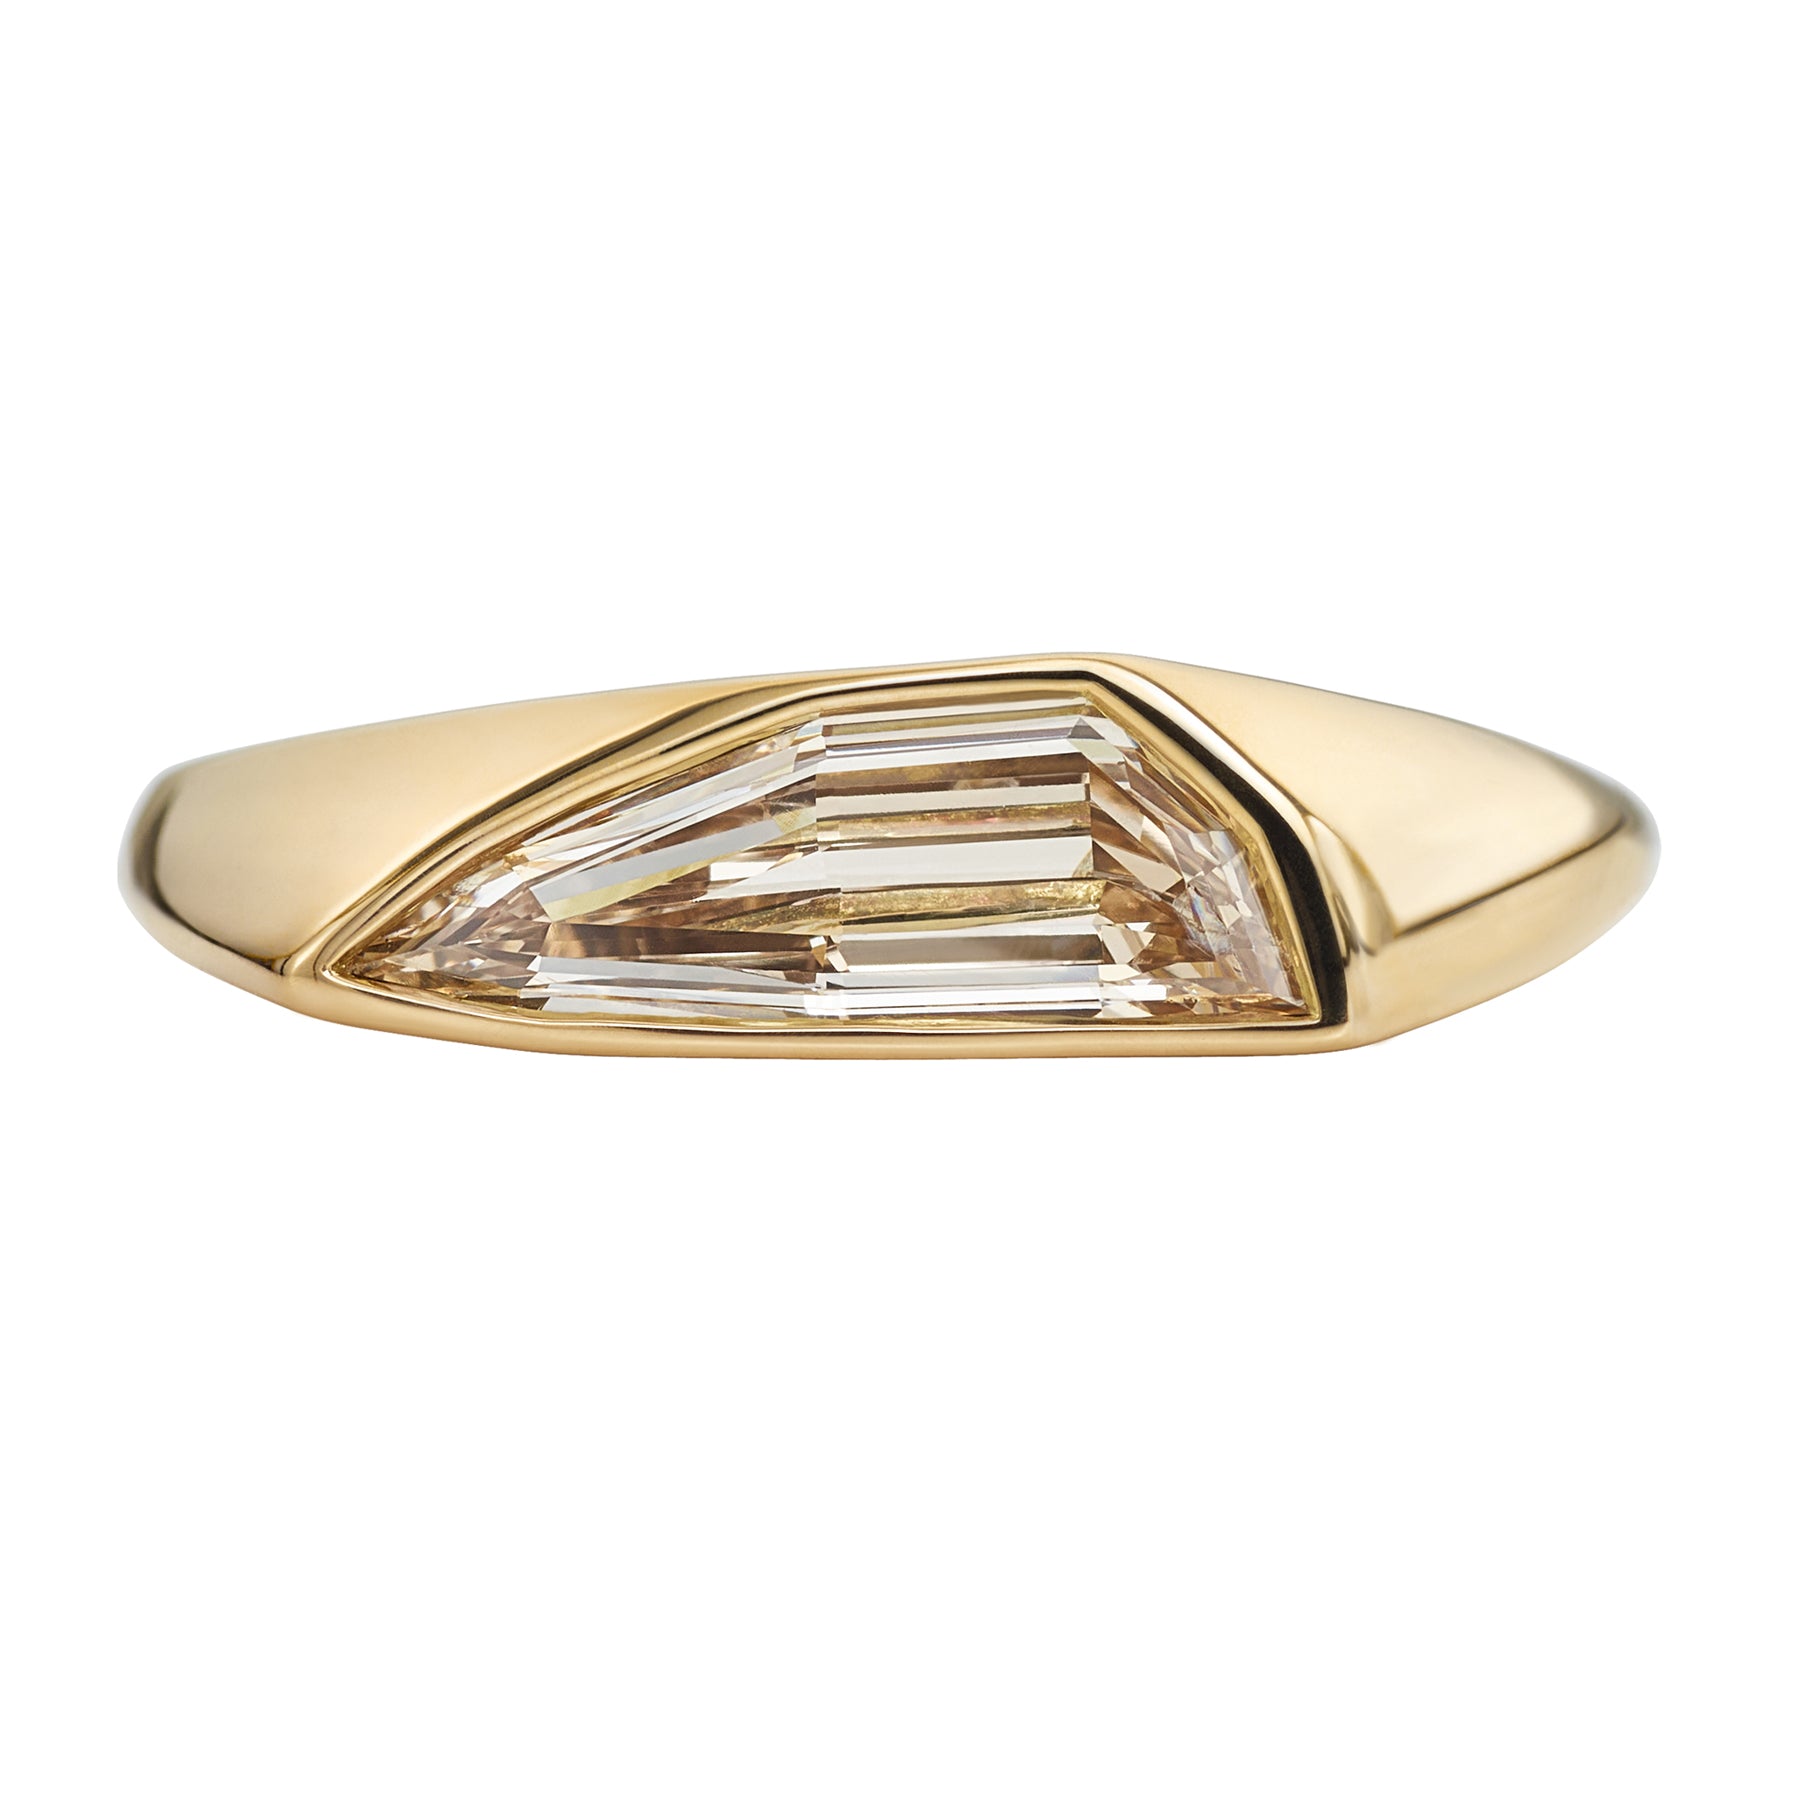 Sliced-Diamond-Solitaire-Ring-with-a-Minimal-Golden-Bezel-OOAK-closeup